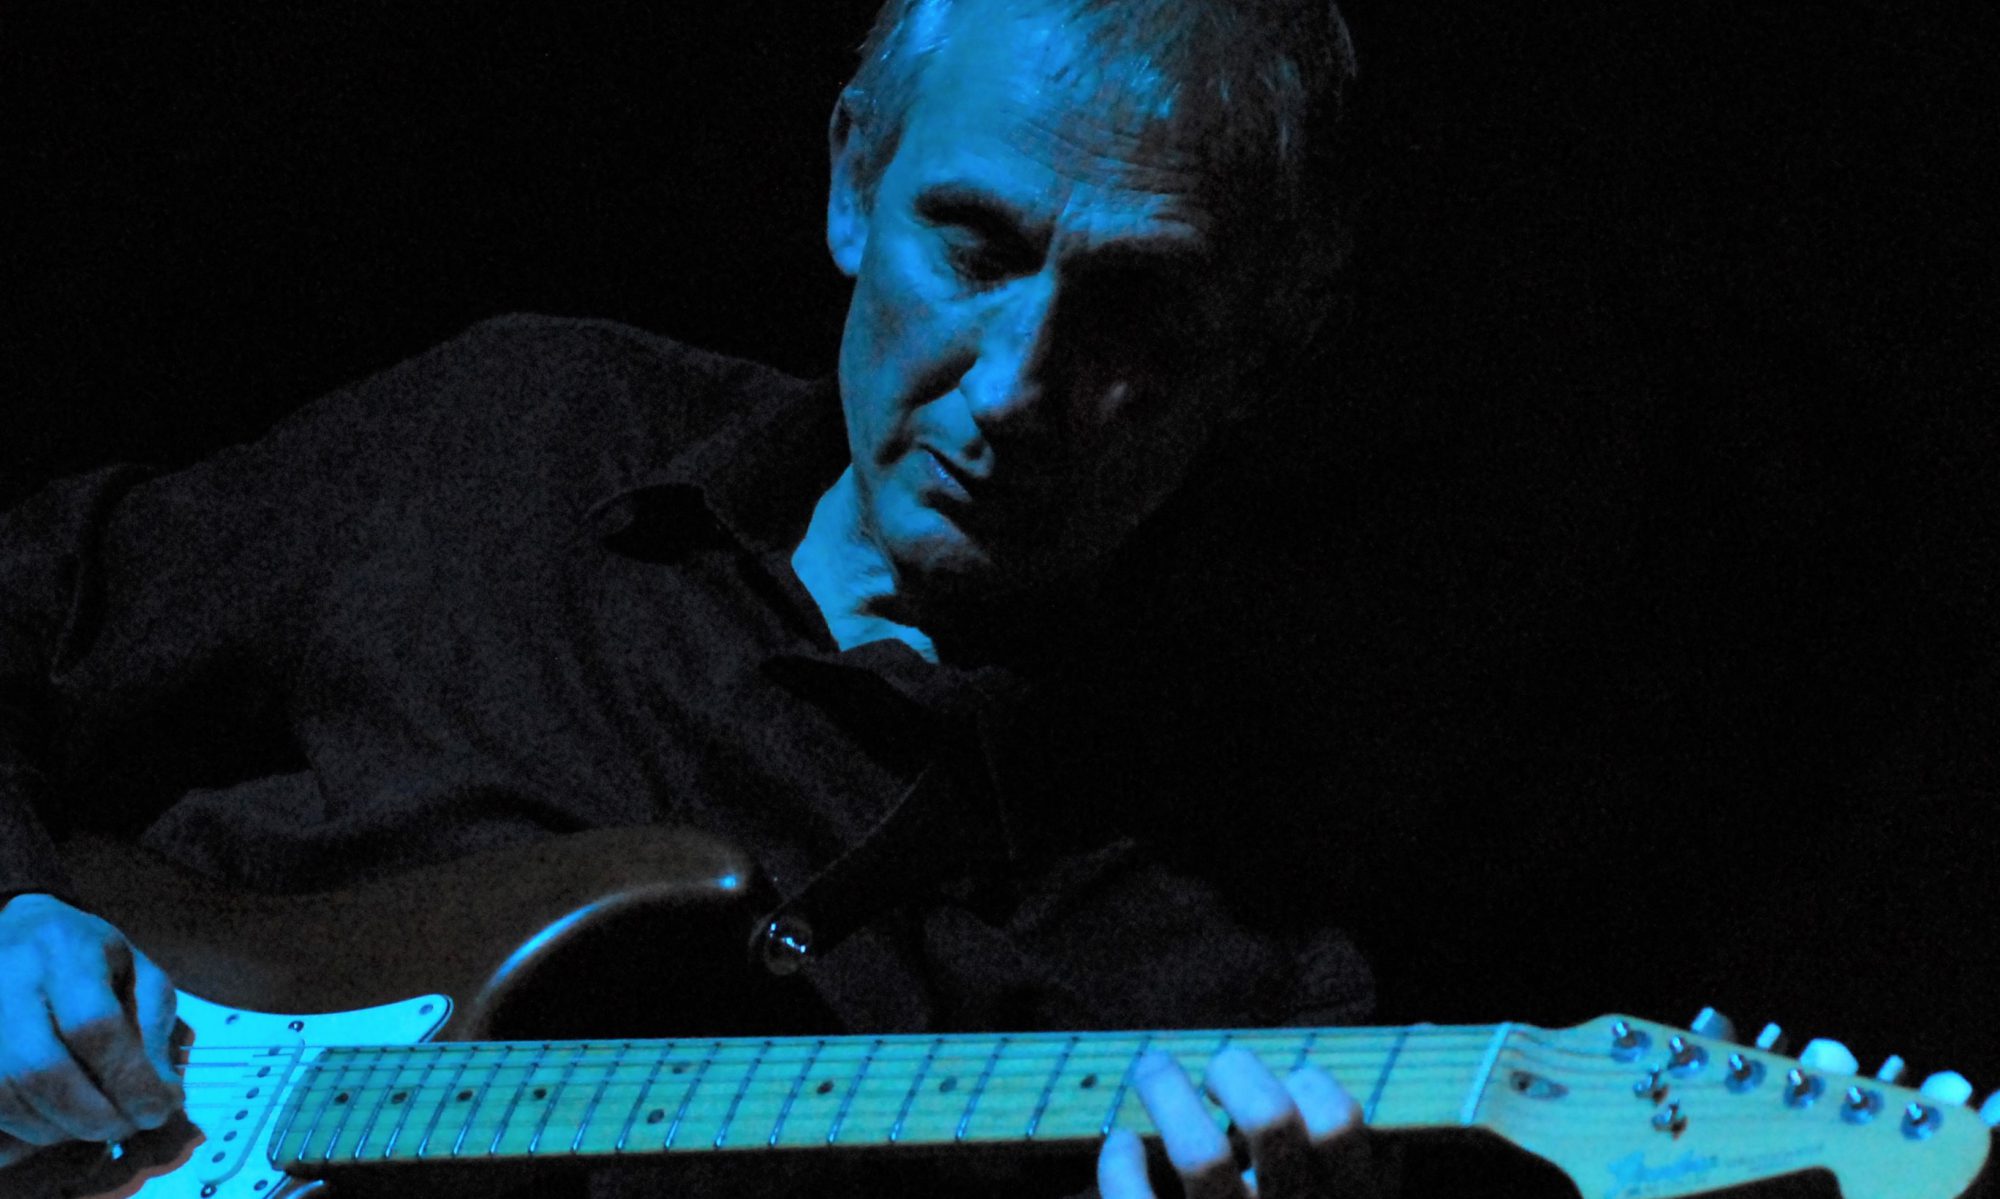 Claudio Lodati - Guitarist and Composer